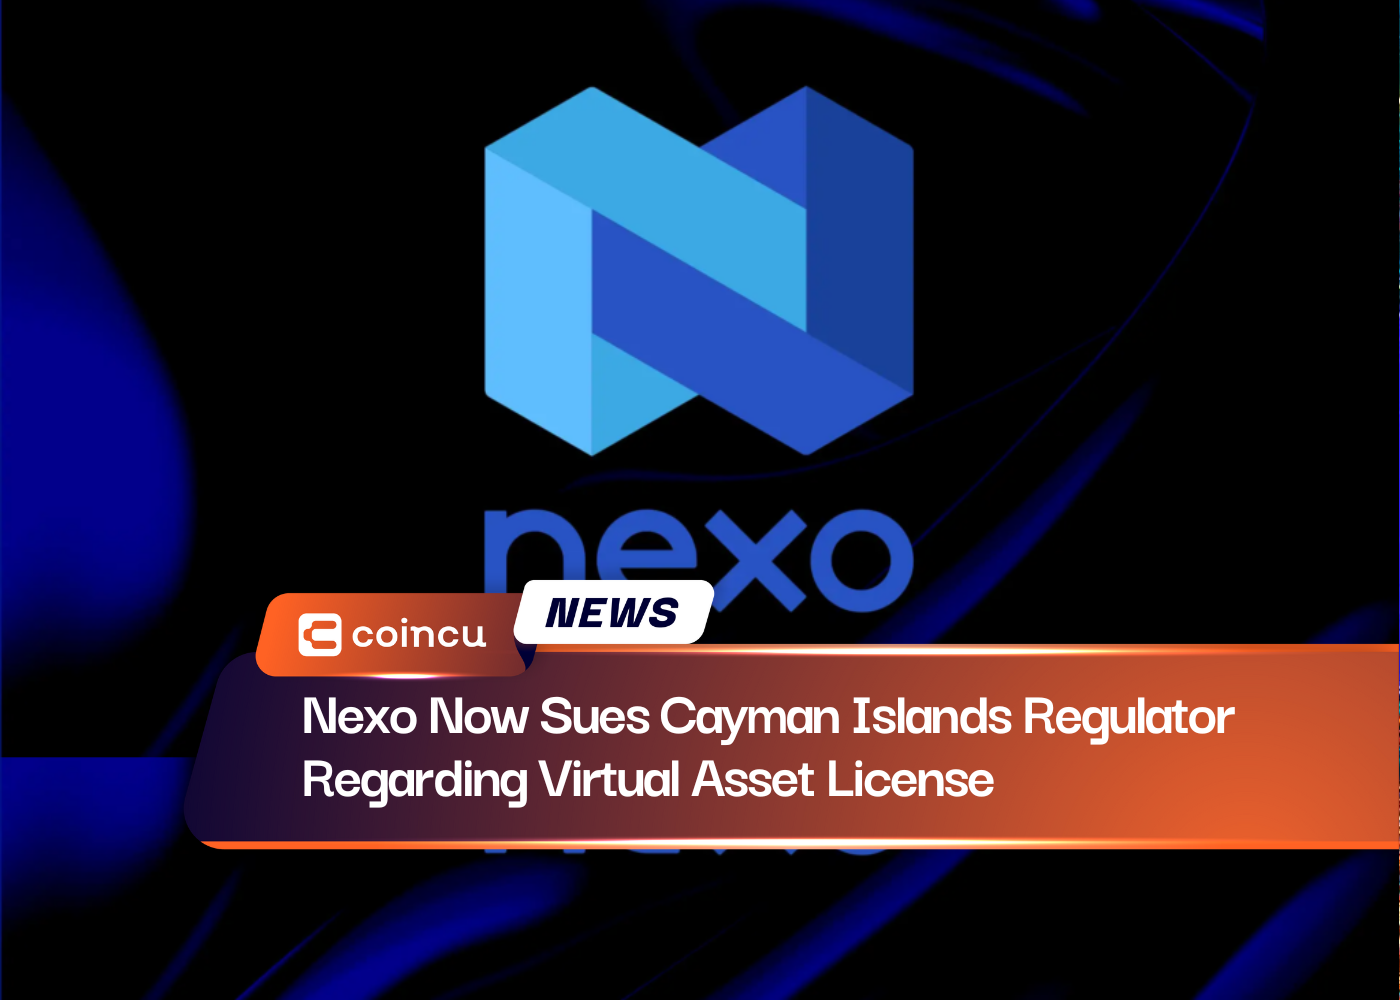 Nexo Now Sues Cayman Islands Regulator Regarding Virtual Asset License